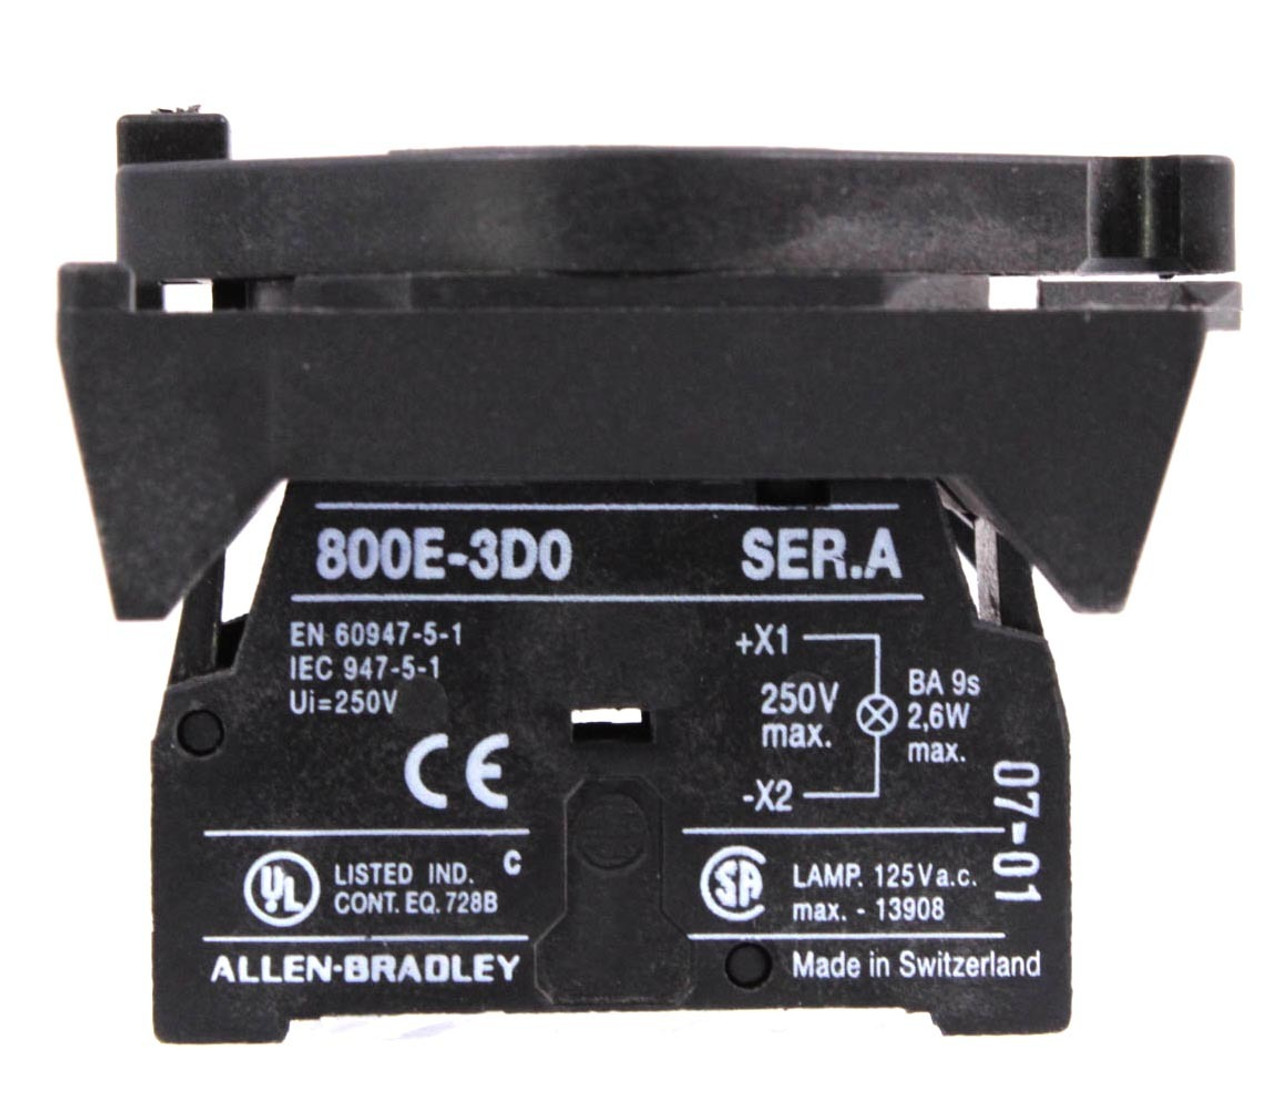 Allen-Bradley 800E-3D0 Light Module Contact Block 250VAC 2.6W W/ Mount